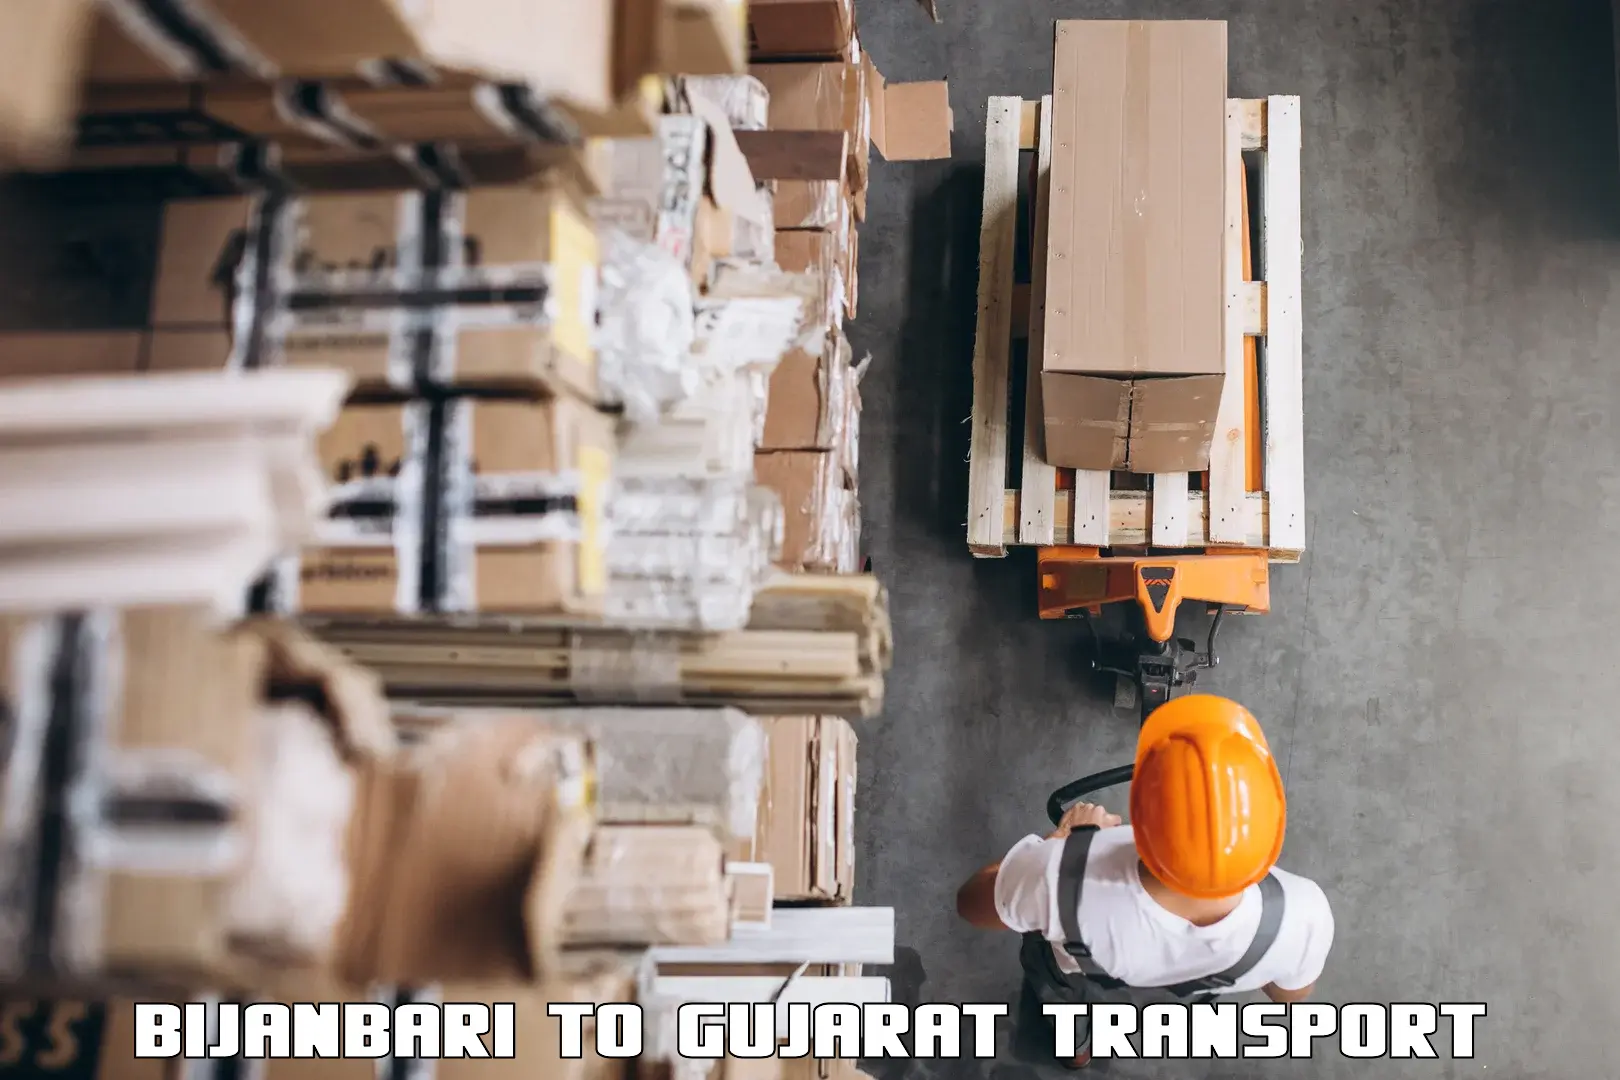 Transport bike from one state to another Bijanbari to Gujarat